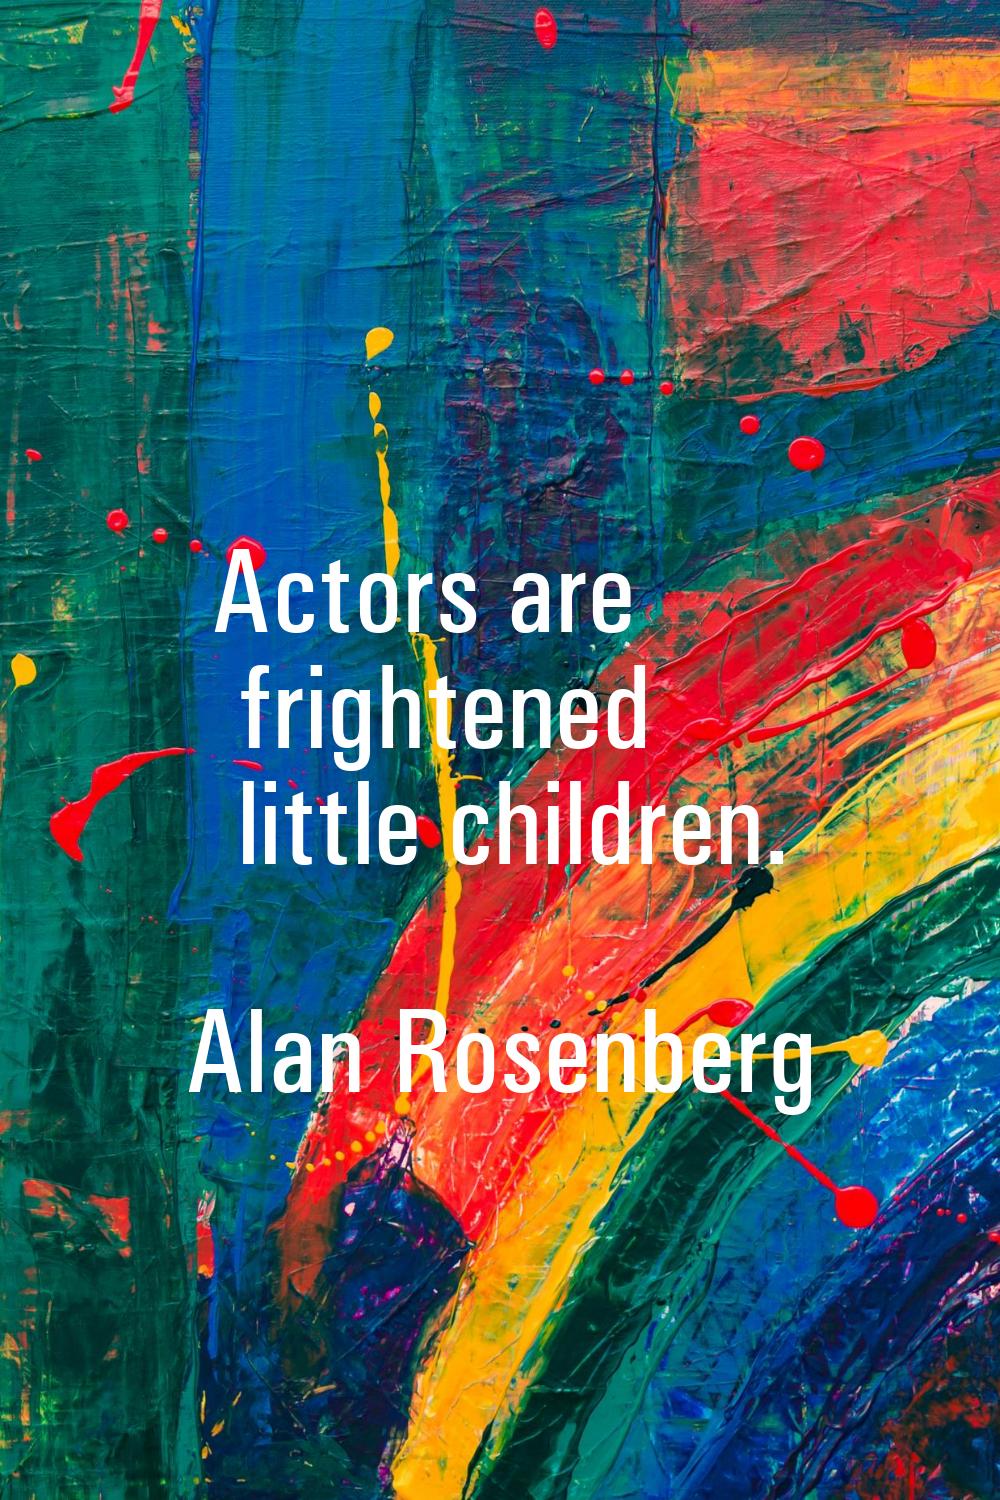 Actors are frightened little children.